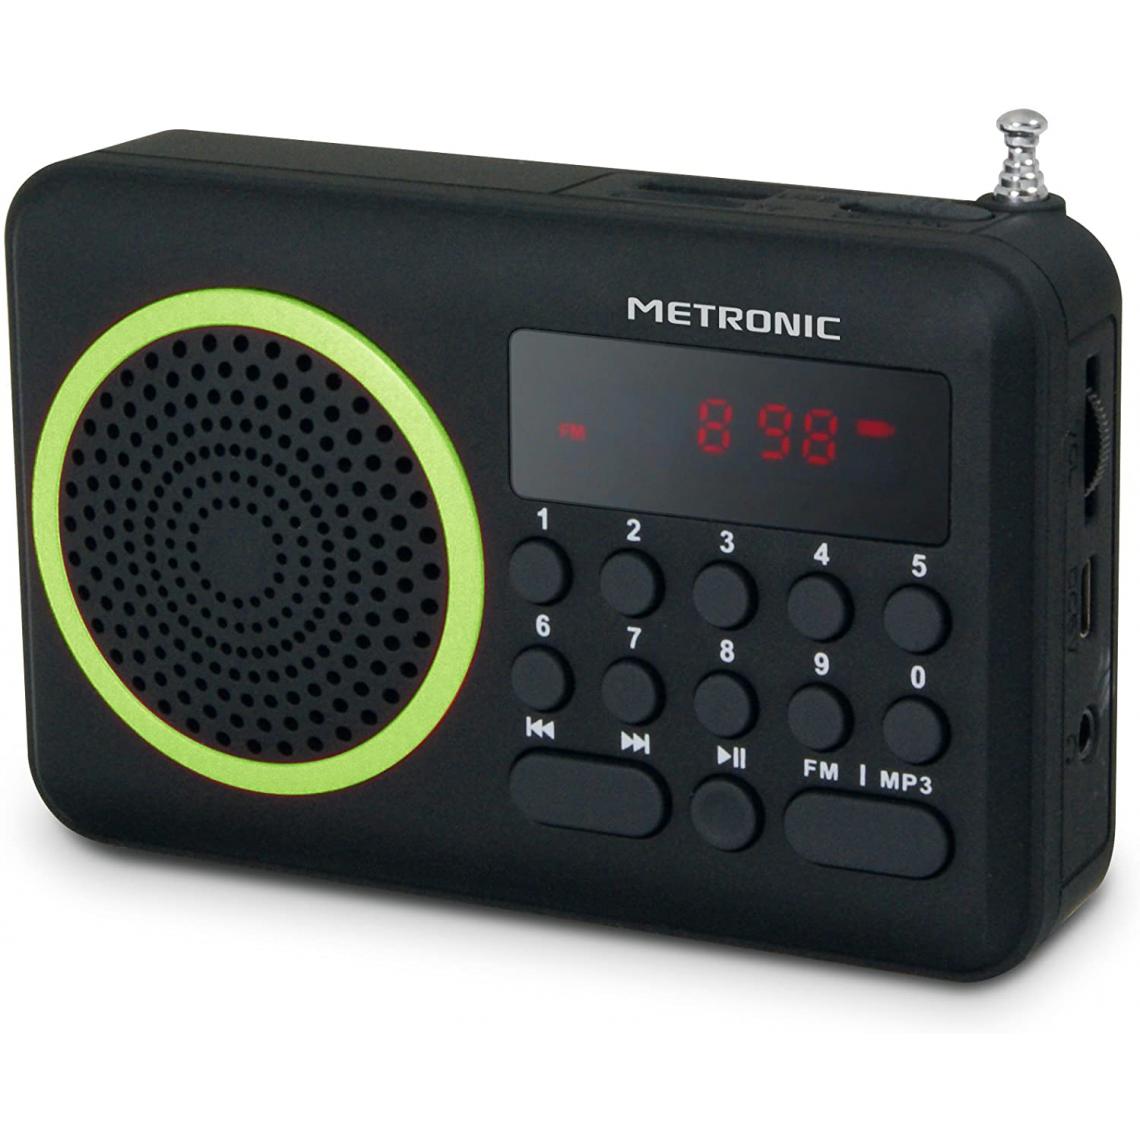 Metronic - radio Portable FM Compact USB SD vert noir - Radio